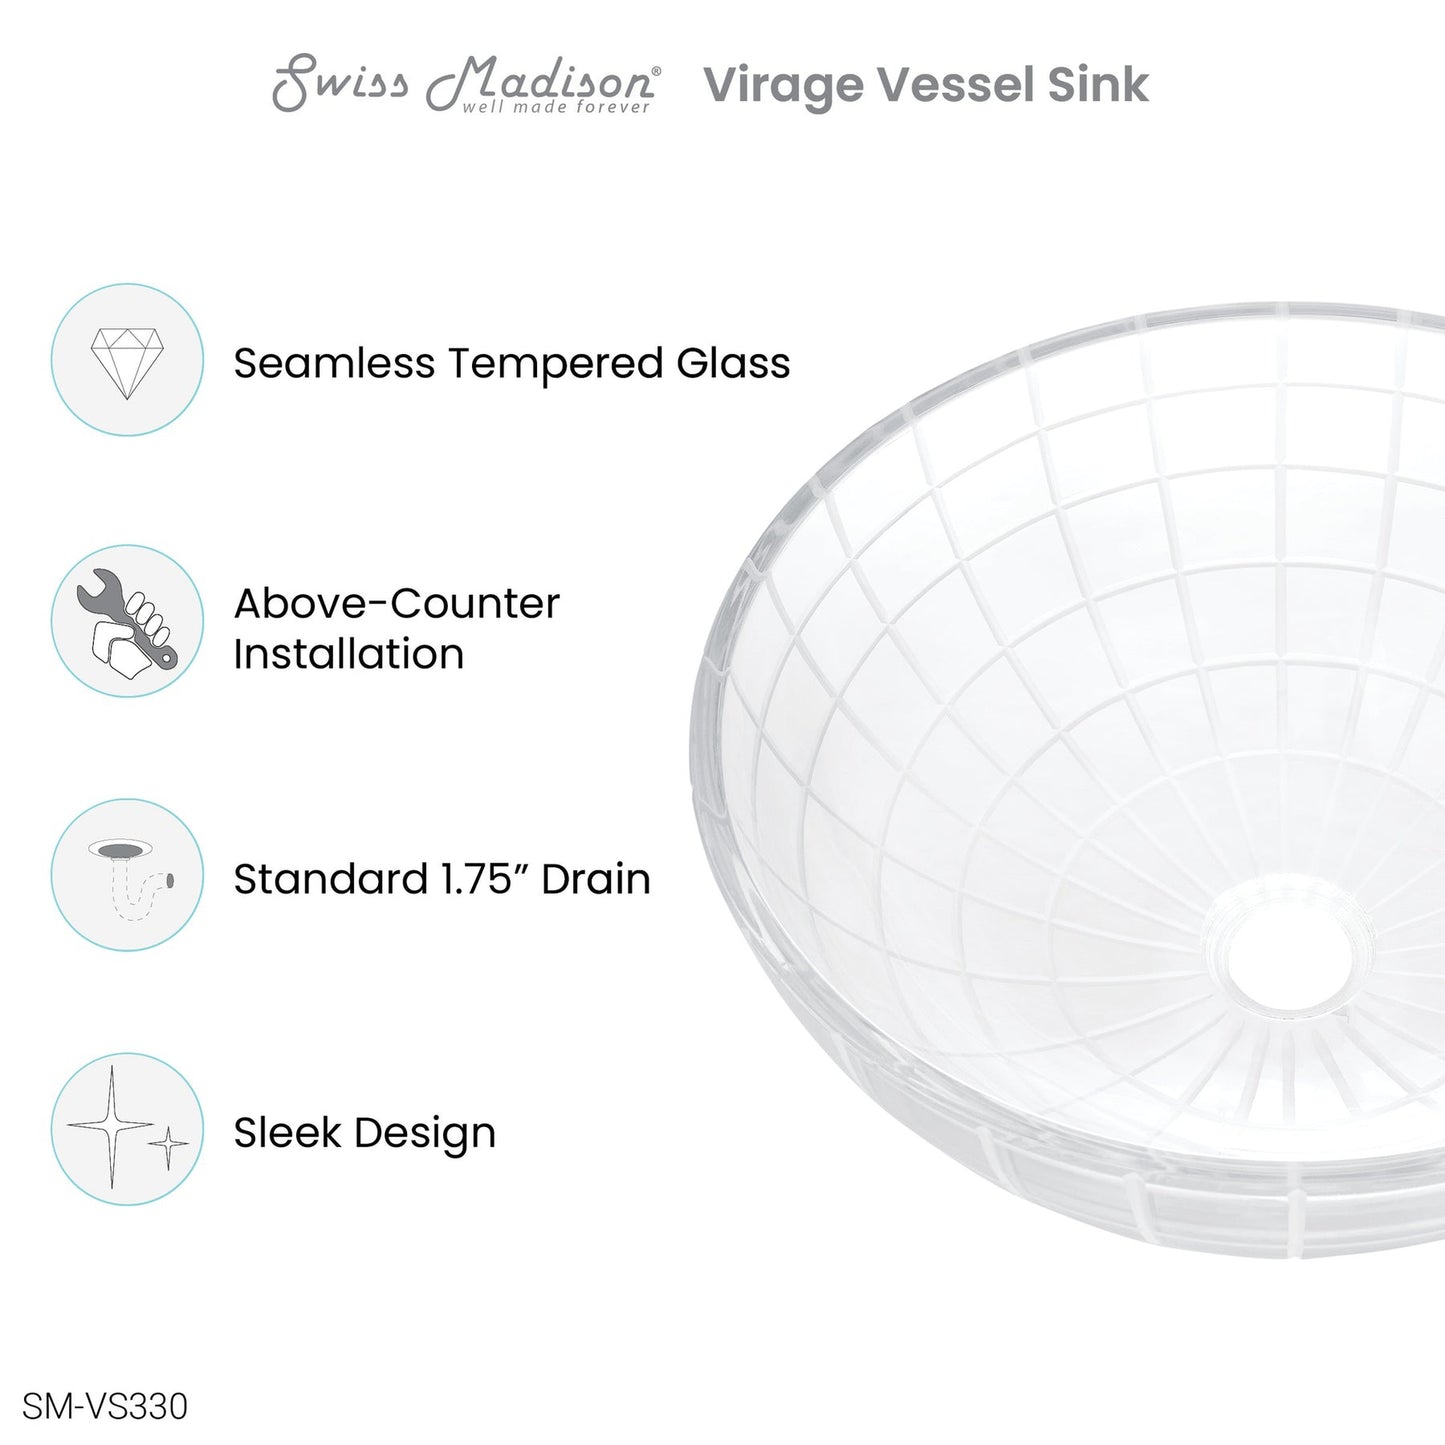 Swiss Madison Virage 17" x 17" Clear Round Tempered Glass Bathroom Vessel Sink